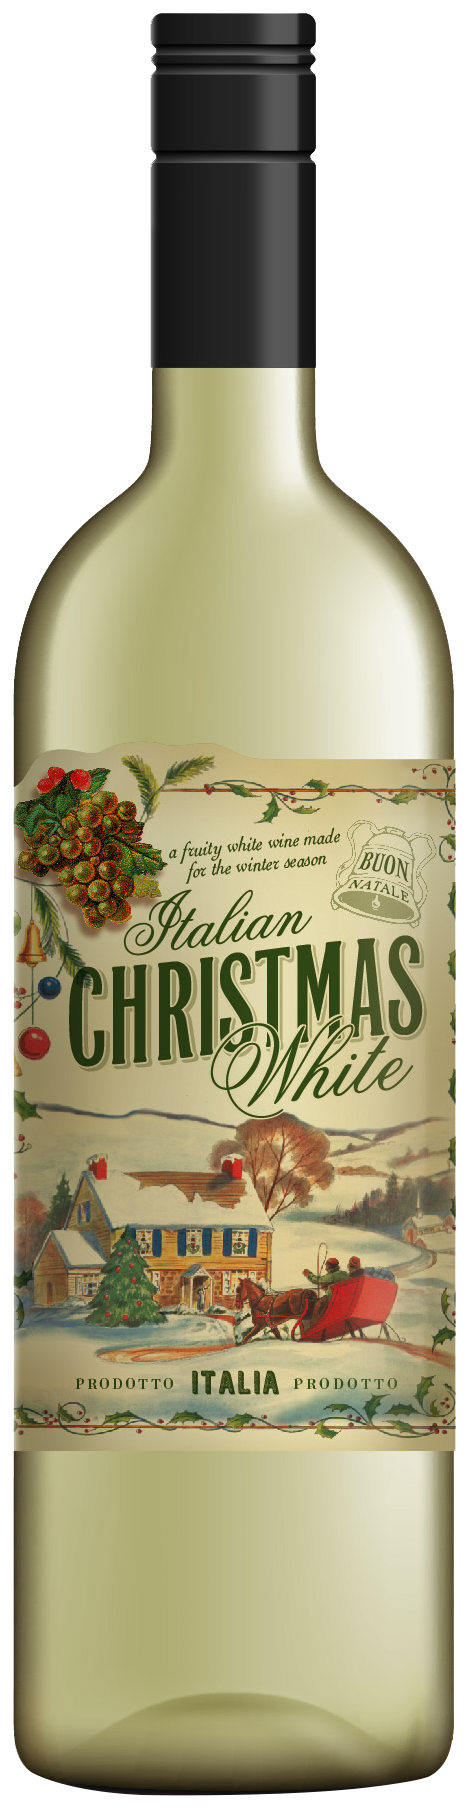 Boglione Christmas White